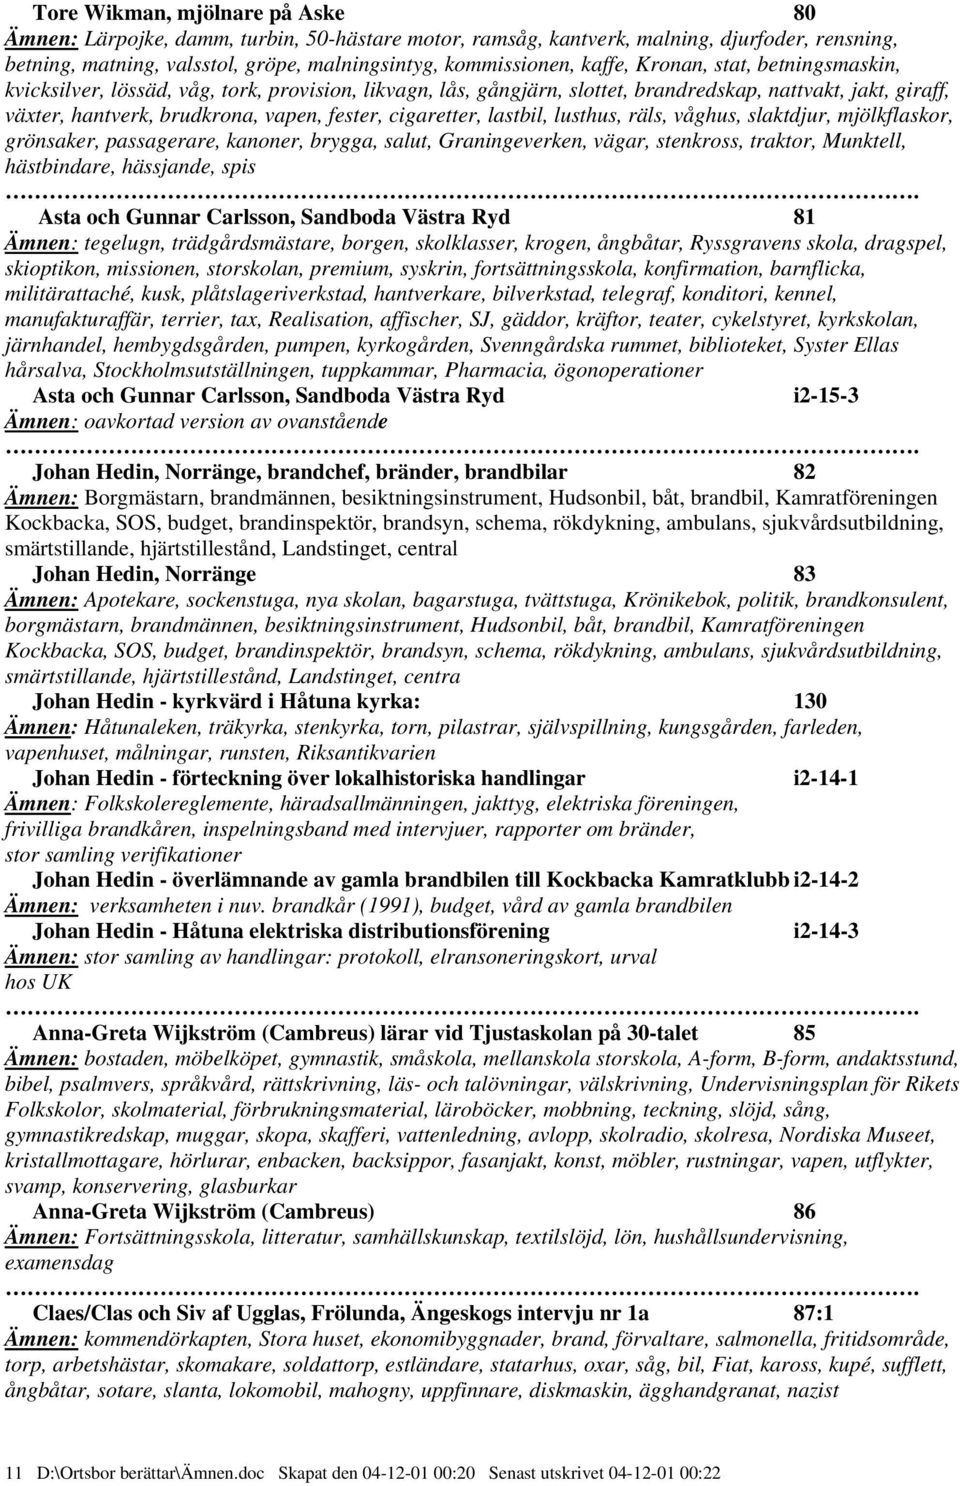 k45 Alldahl, Erik Erik Alldahl, kyrkoherde,bro,sparre,nazism i3 Allerstav,  Blomgvist, Sandén Kring Stockholms-Näs hembygdsgård k107 Andersson, Göran -  PDF Free Download